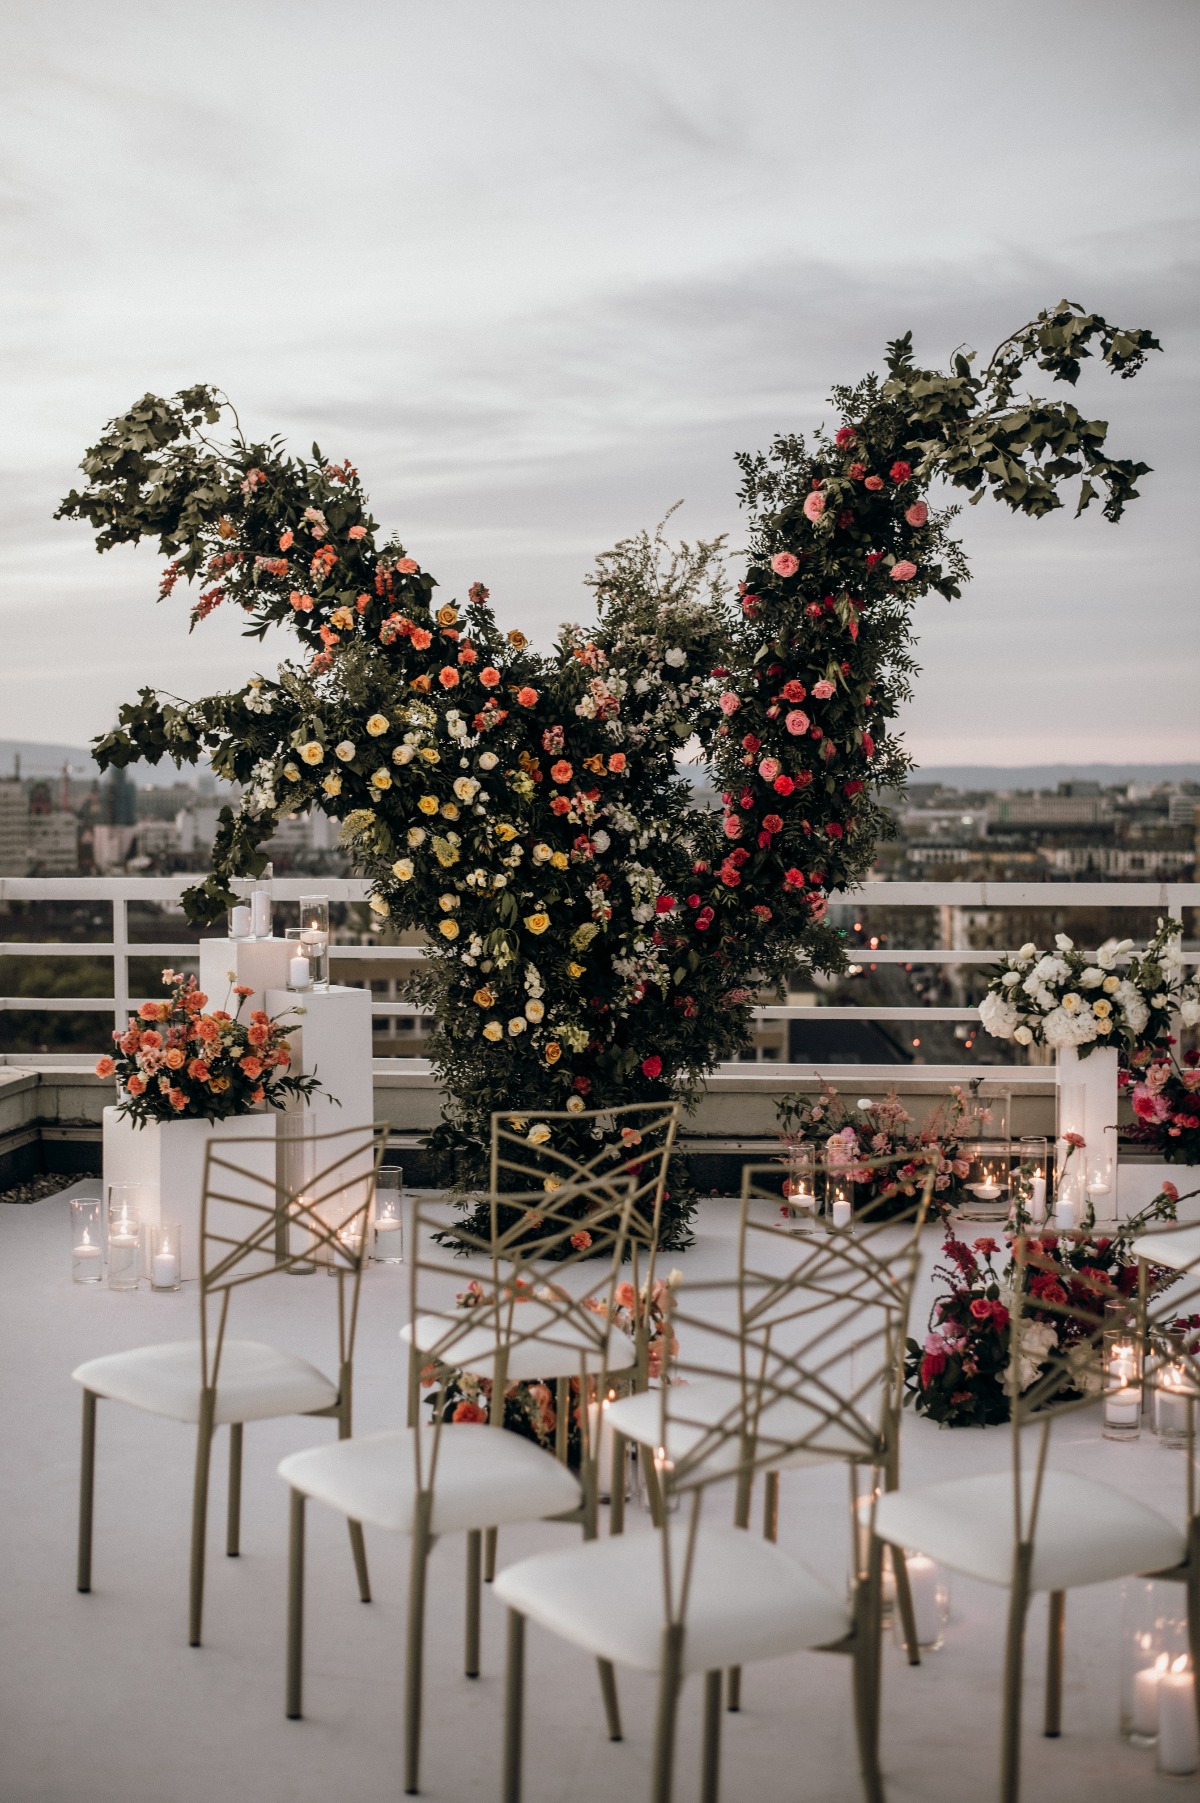 Whimsical Rooftop Wedding Inspiration